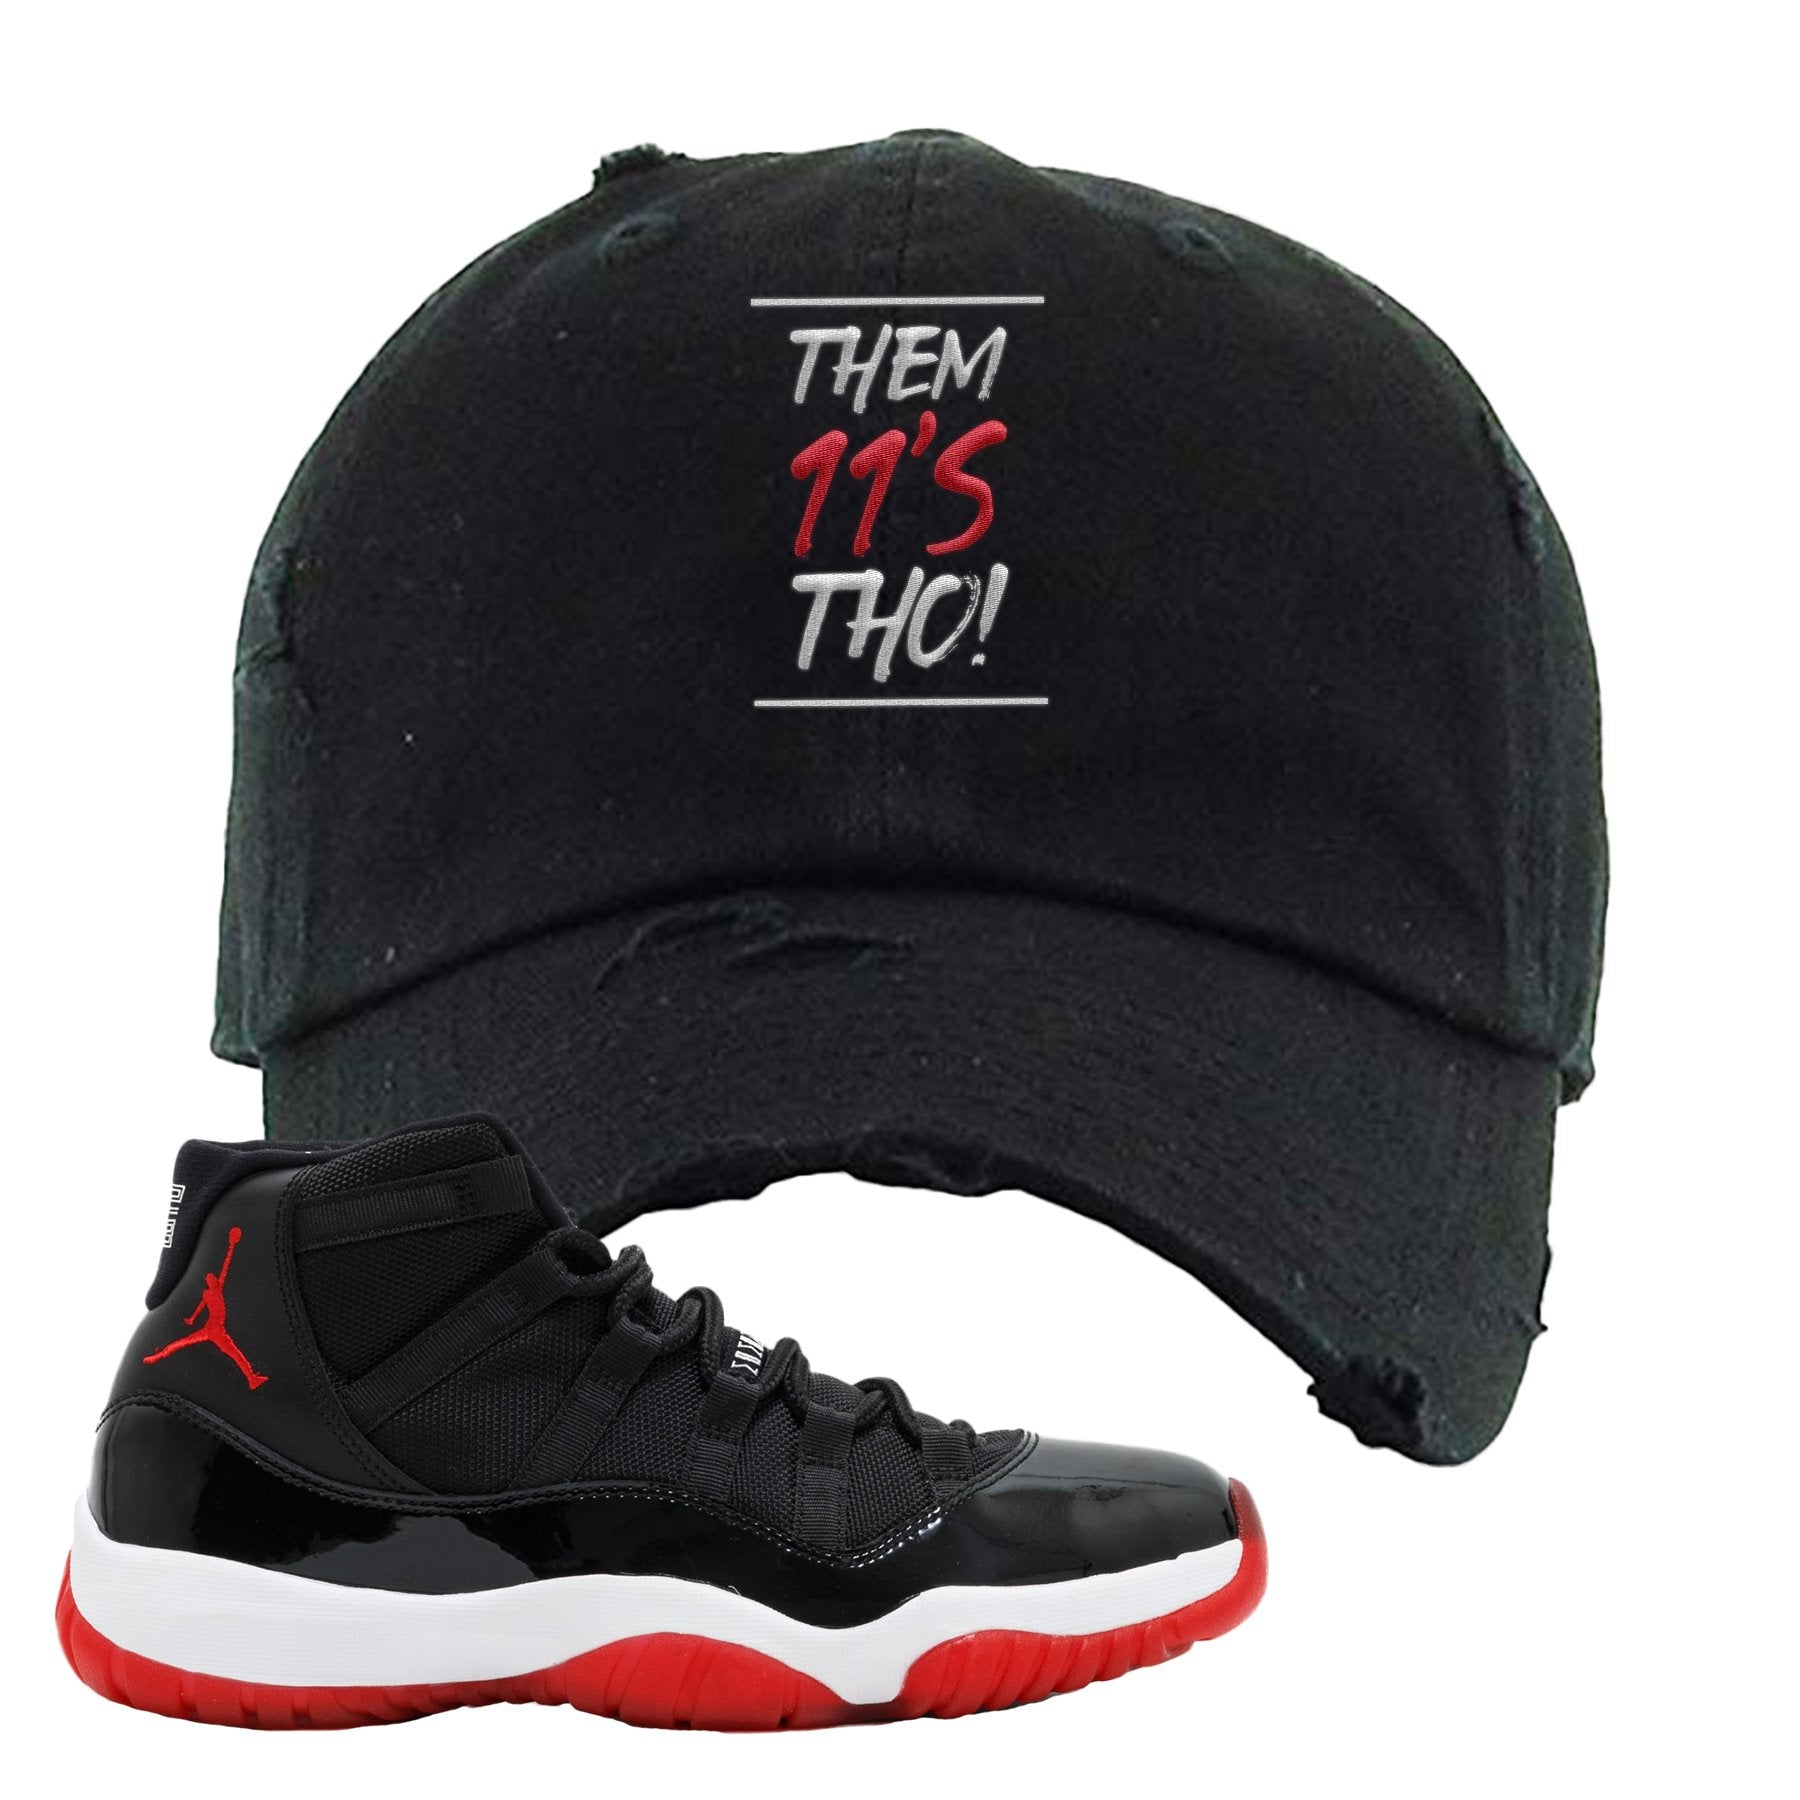 Jordan 11 Bred Them 11s Tho! Black Sneaker Hook Up Distressed Dad Hat